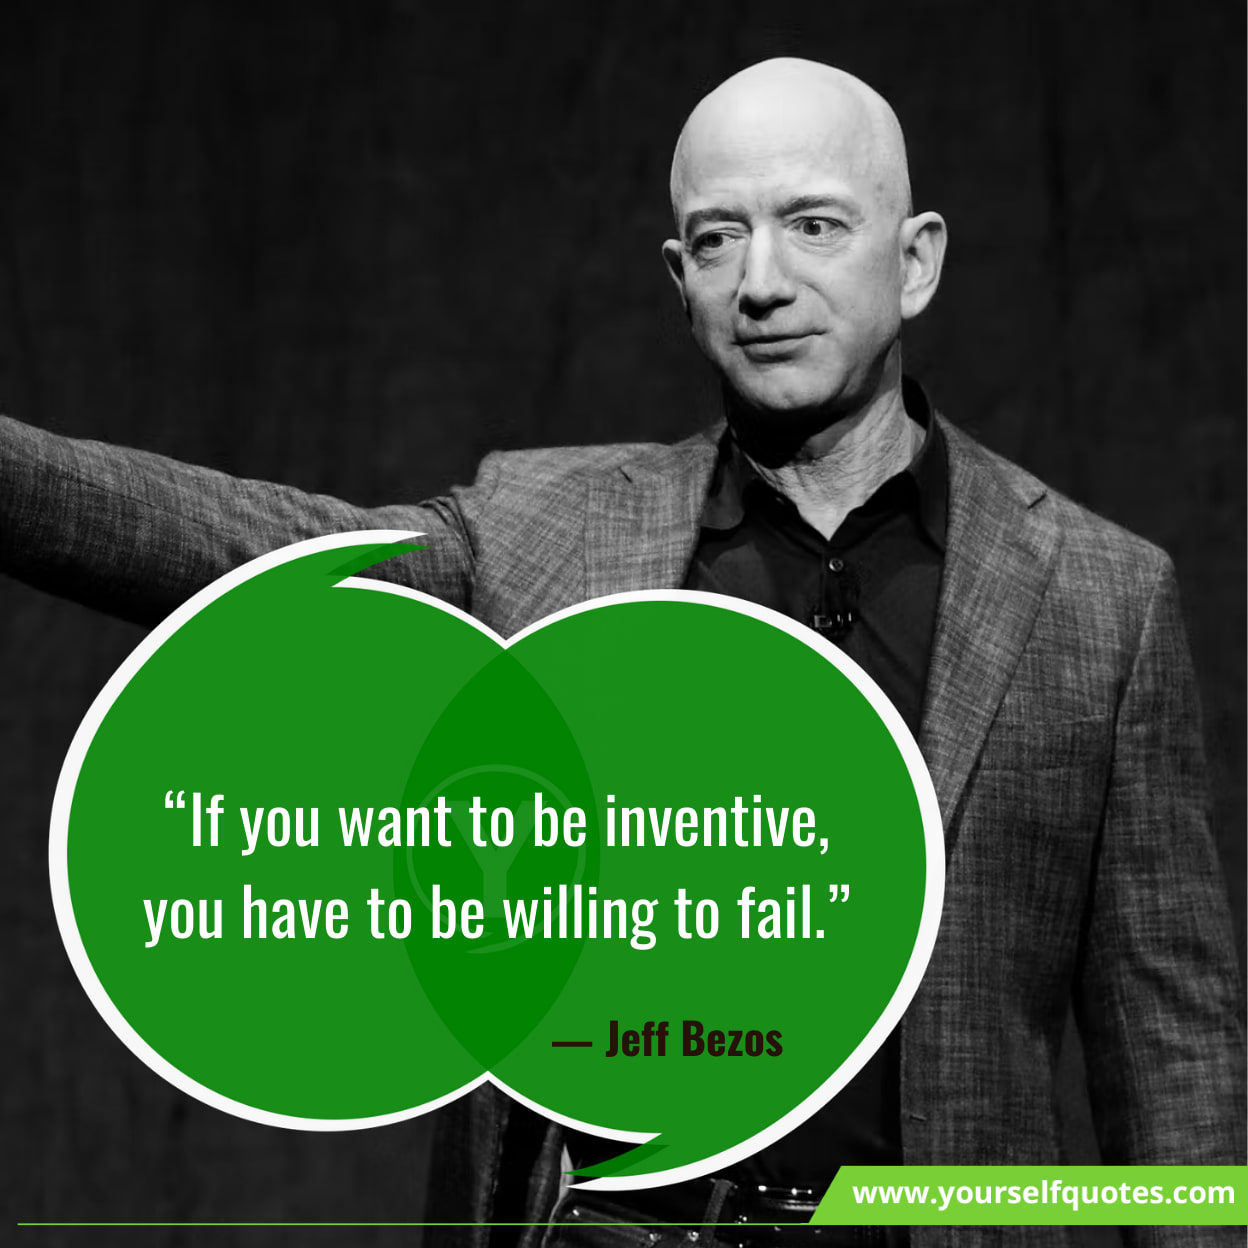 Jeff Bezos Quotes About Success